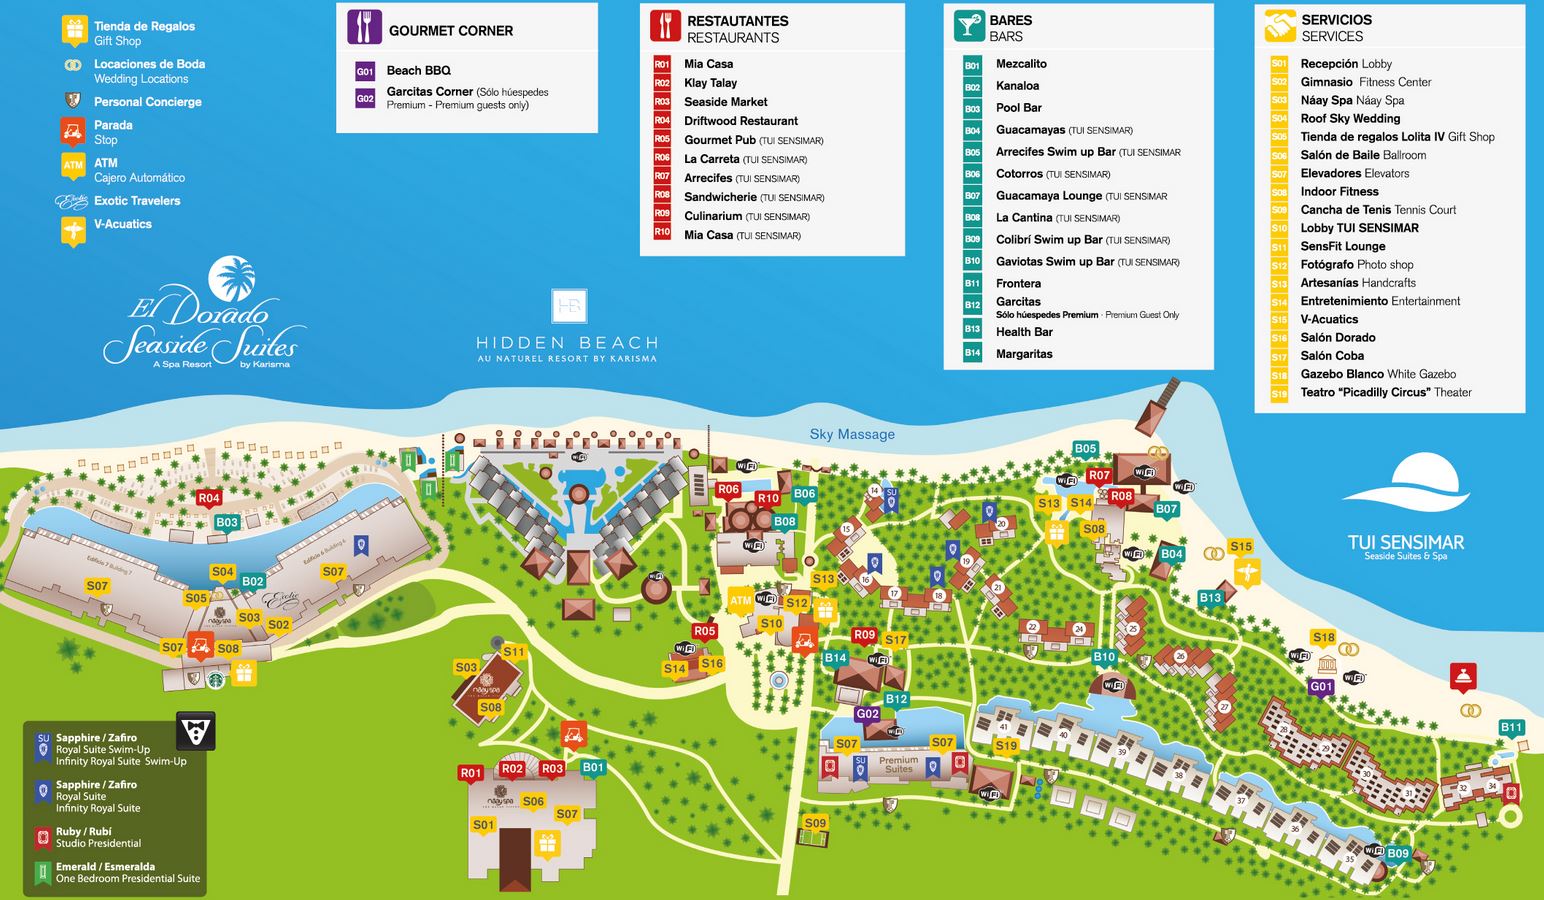 Map Of El Dorado Royale Resort In Mexico - Get Latest Map Update